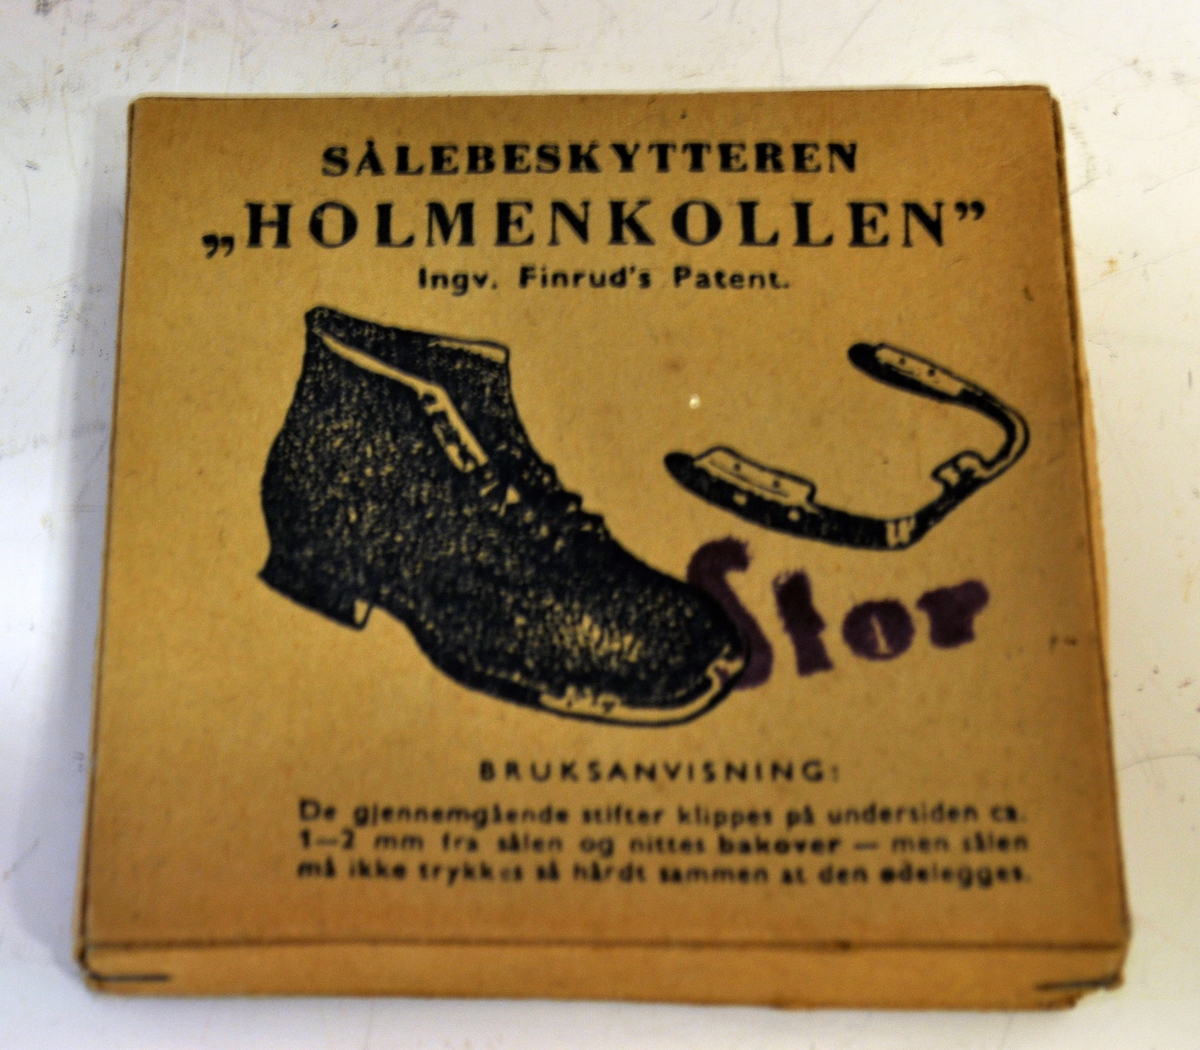 Originalemballasje, pappeske, med sålebeskyttere - skobesparere. "Holmenkollen".